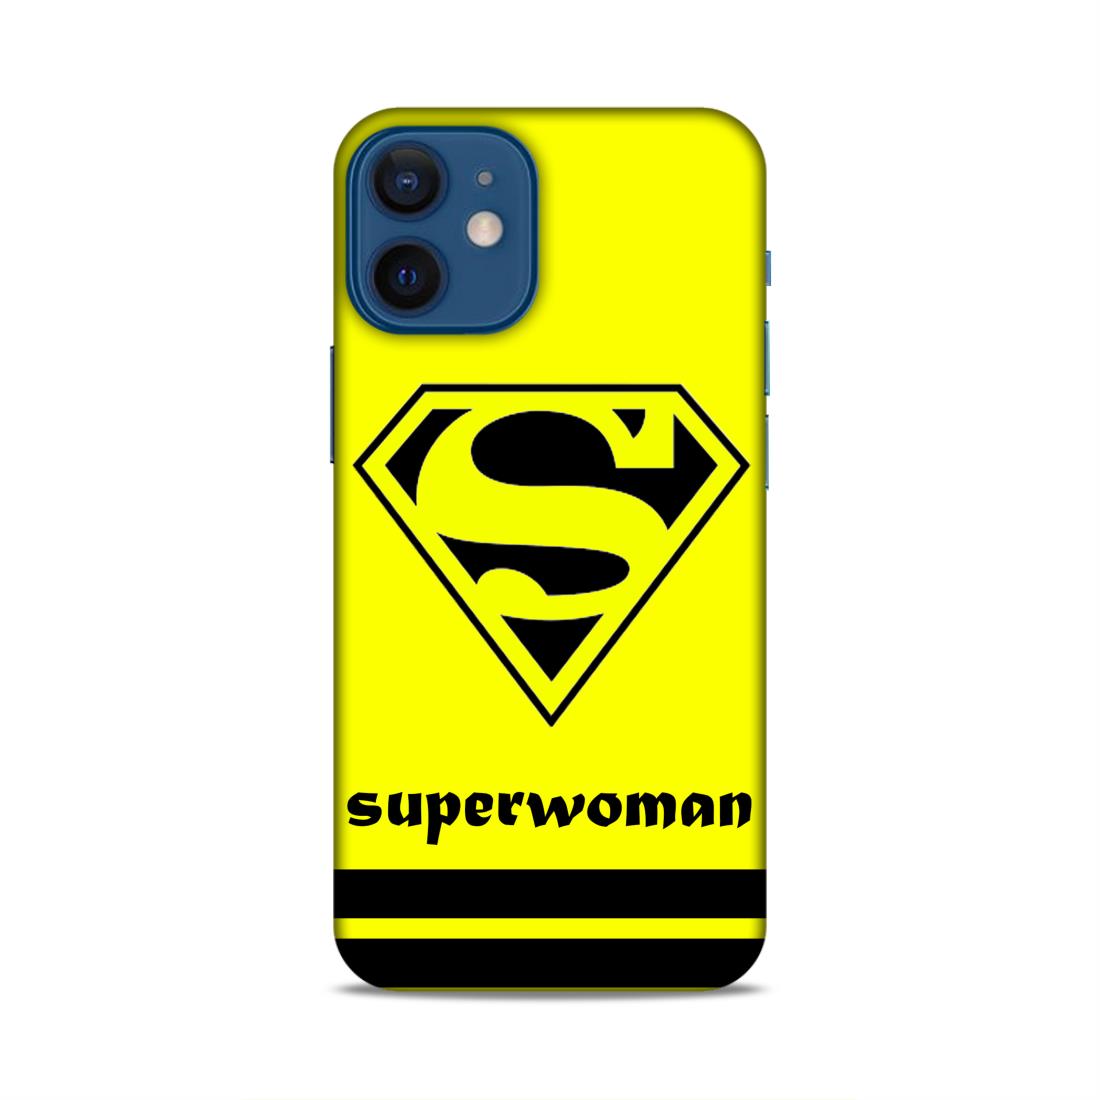 Superwomen Hard Back Case For Apple iPhone 12 Mini